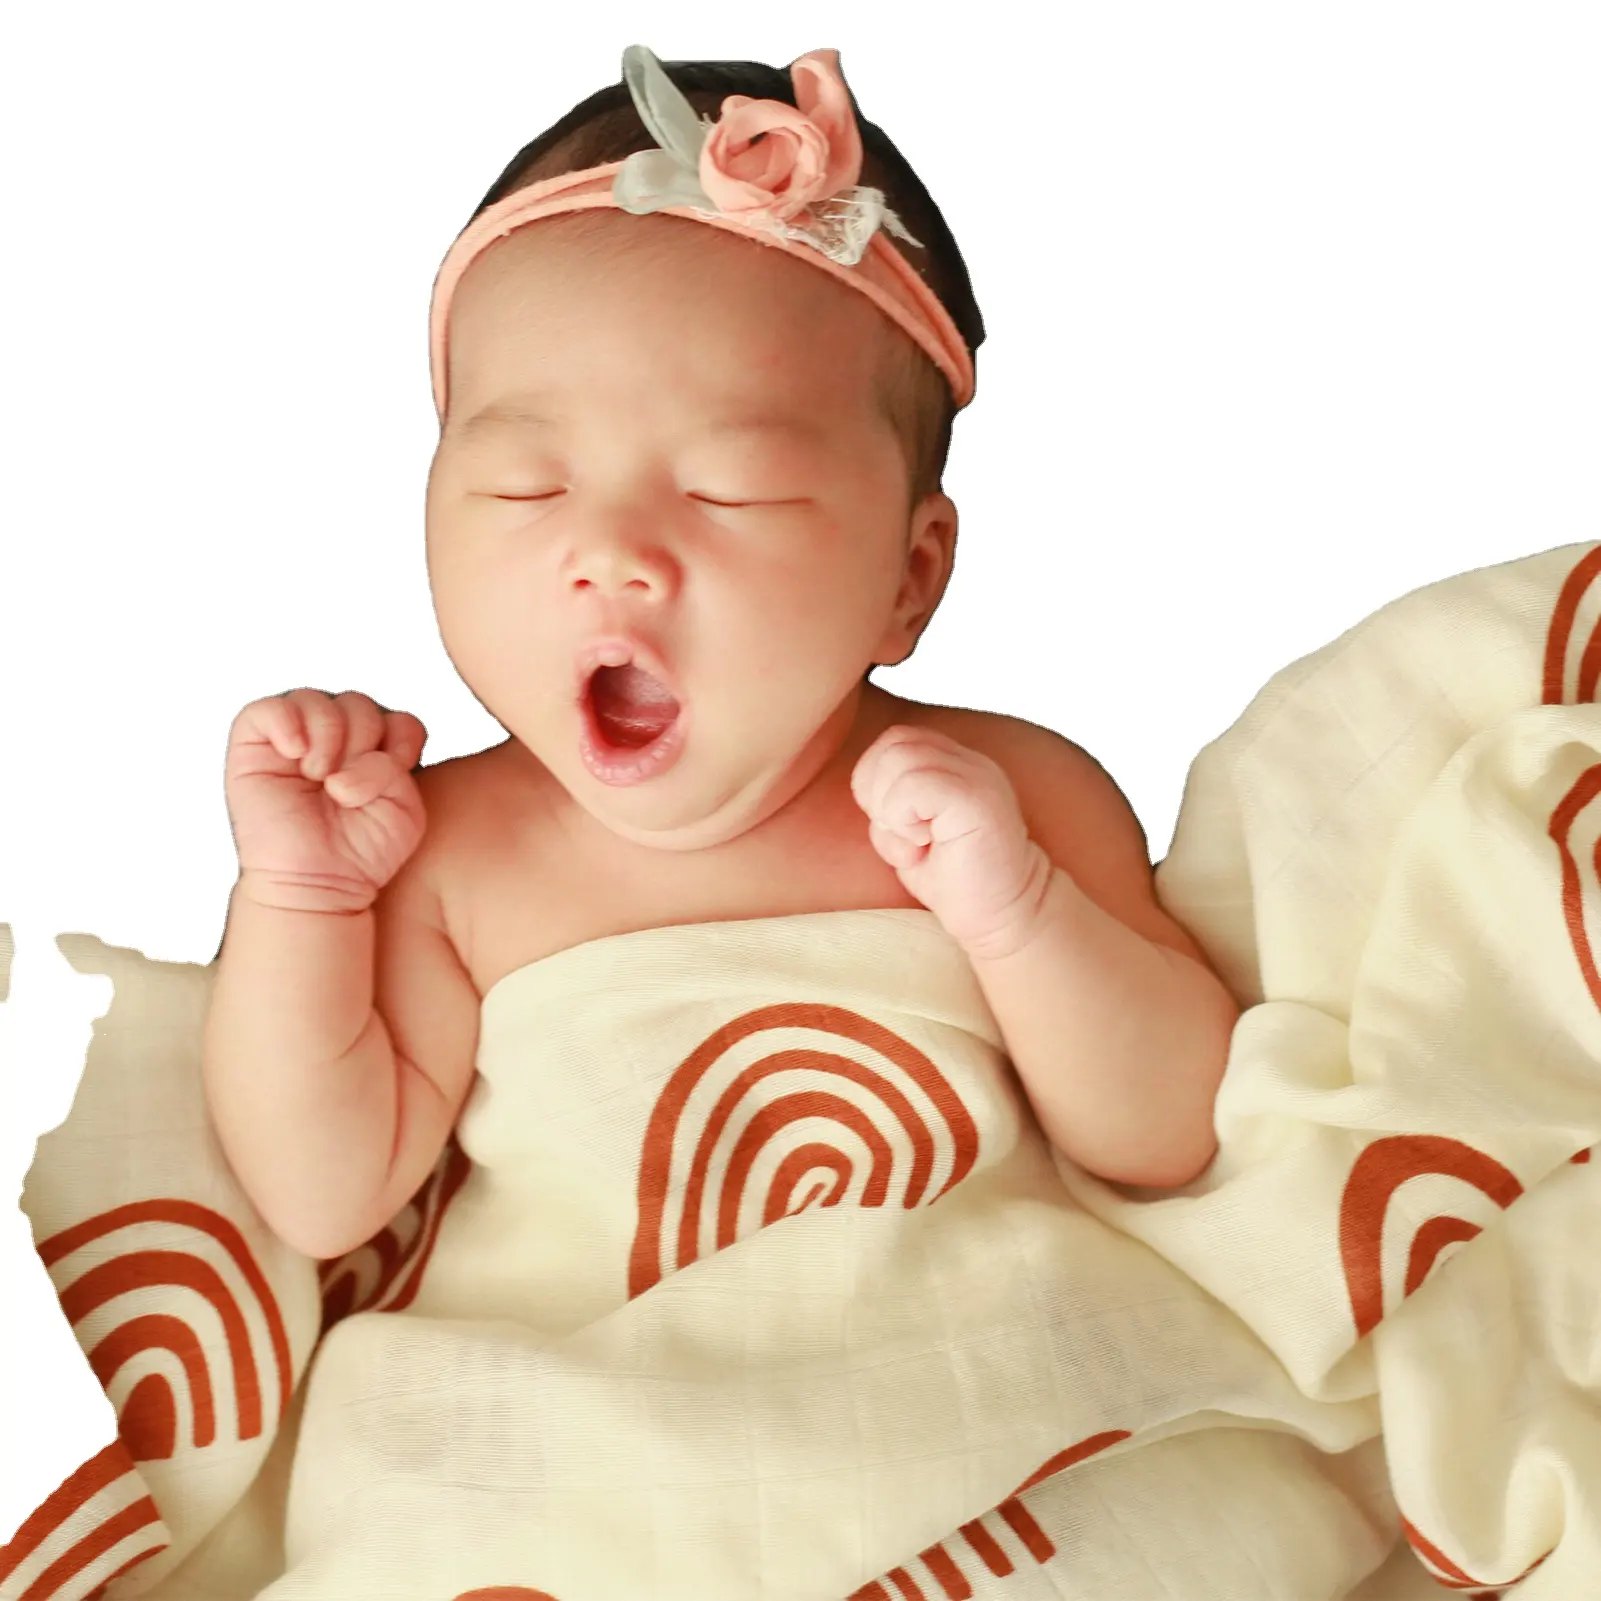 Edredón de muselina para bebé recién nacido, Toalla de baño transpirable con estampado bonito, manta para bebé